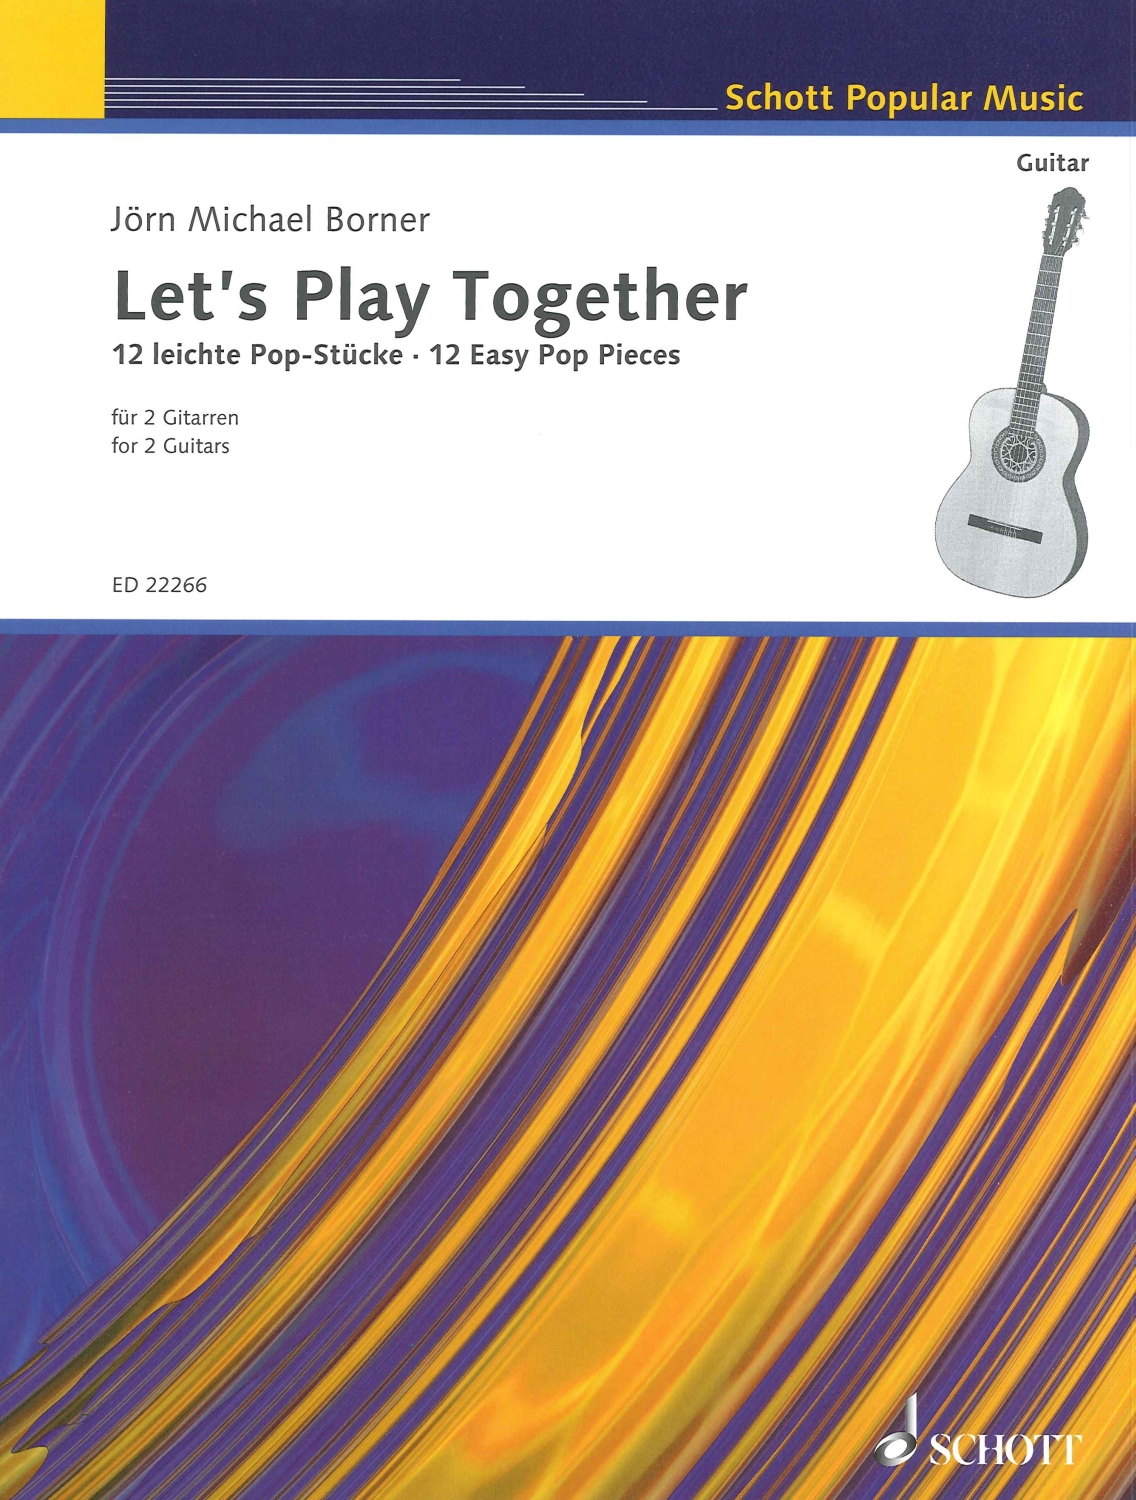 joern-michael-borner-lets-play-together-2gtr-_spie_0001.JPG